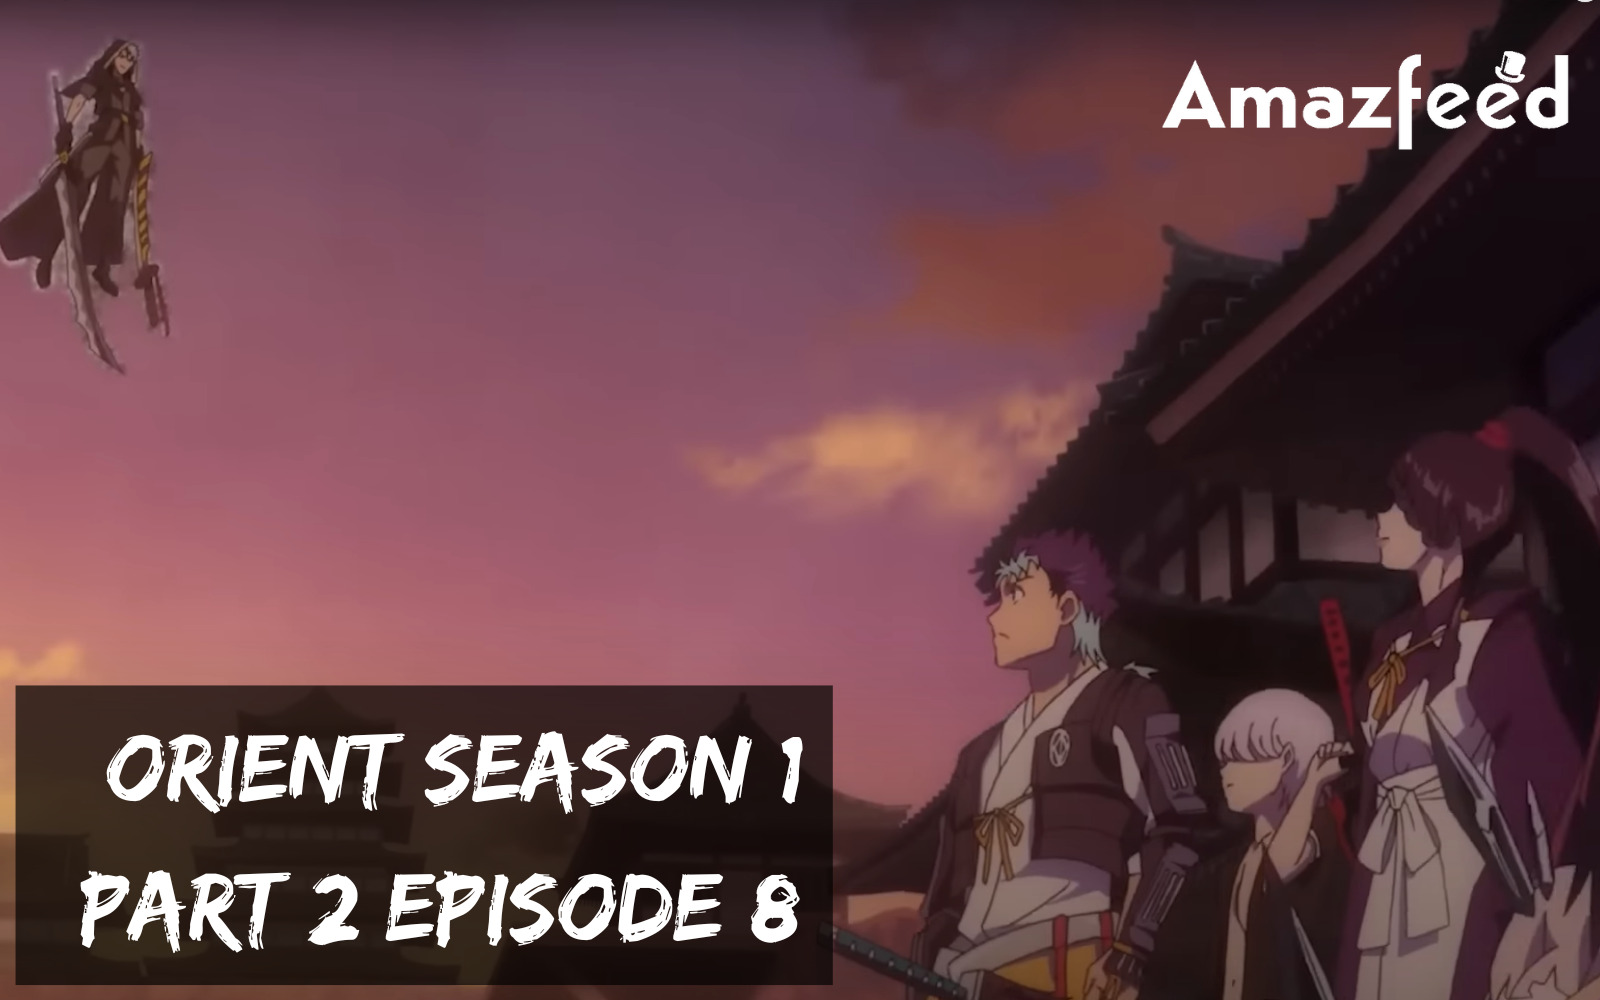 Orient Season 1 Part 2 Episode 8 Release Date